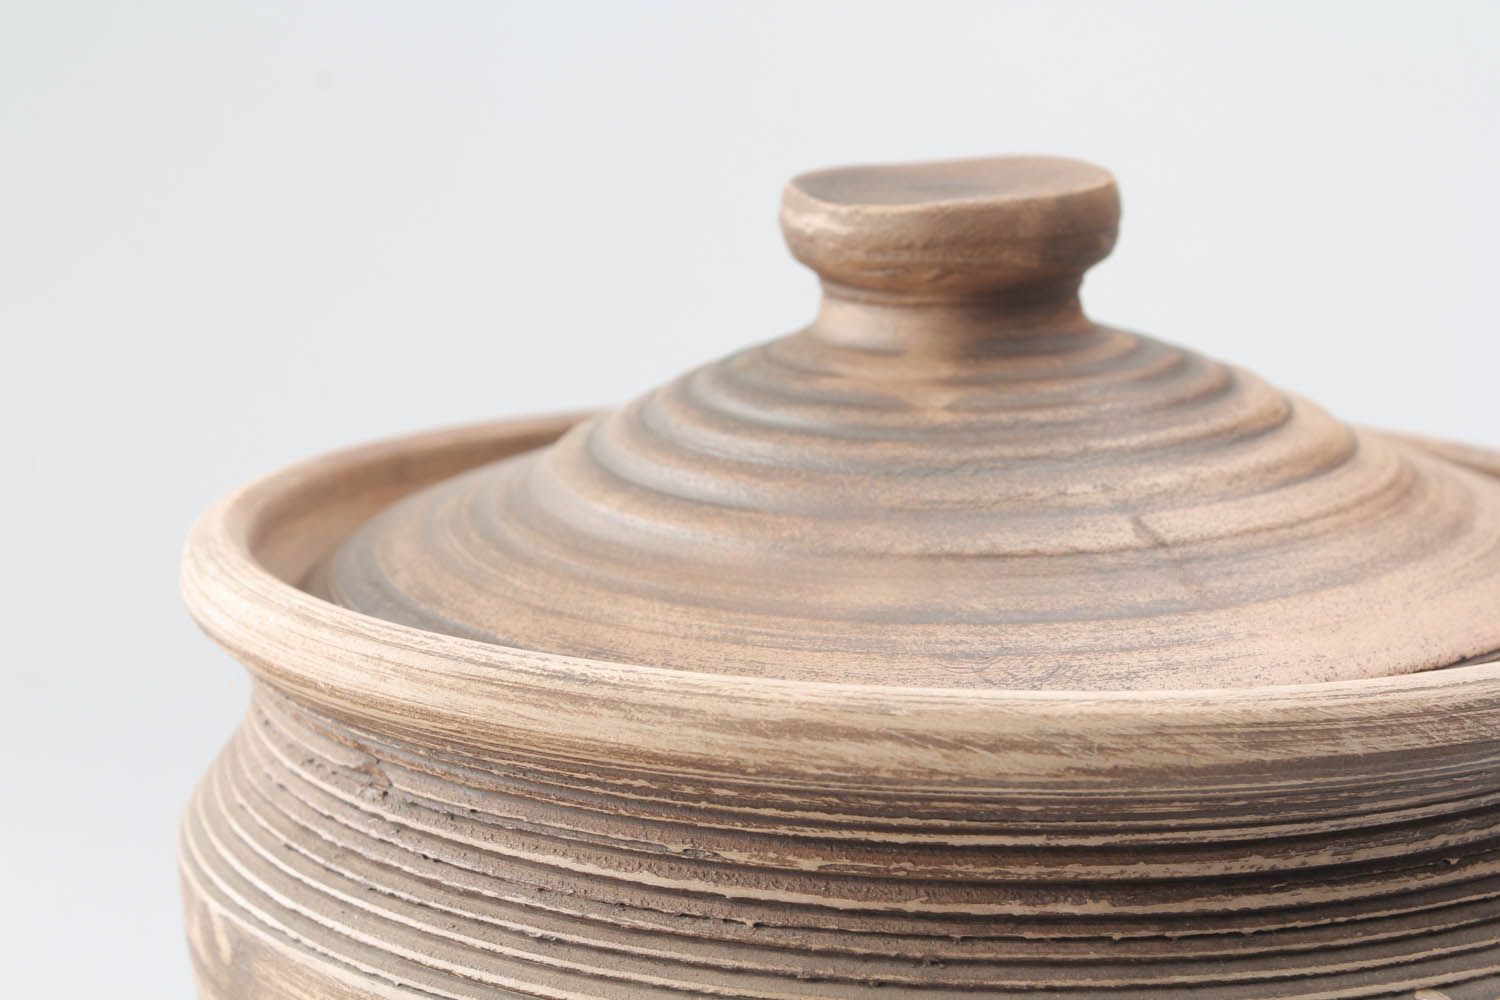 Ceramic pot for baking photo 3